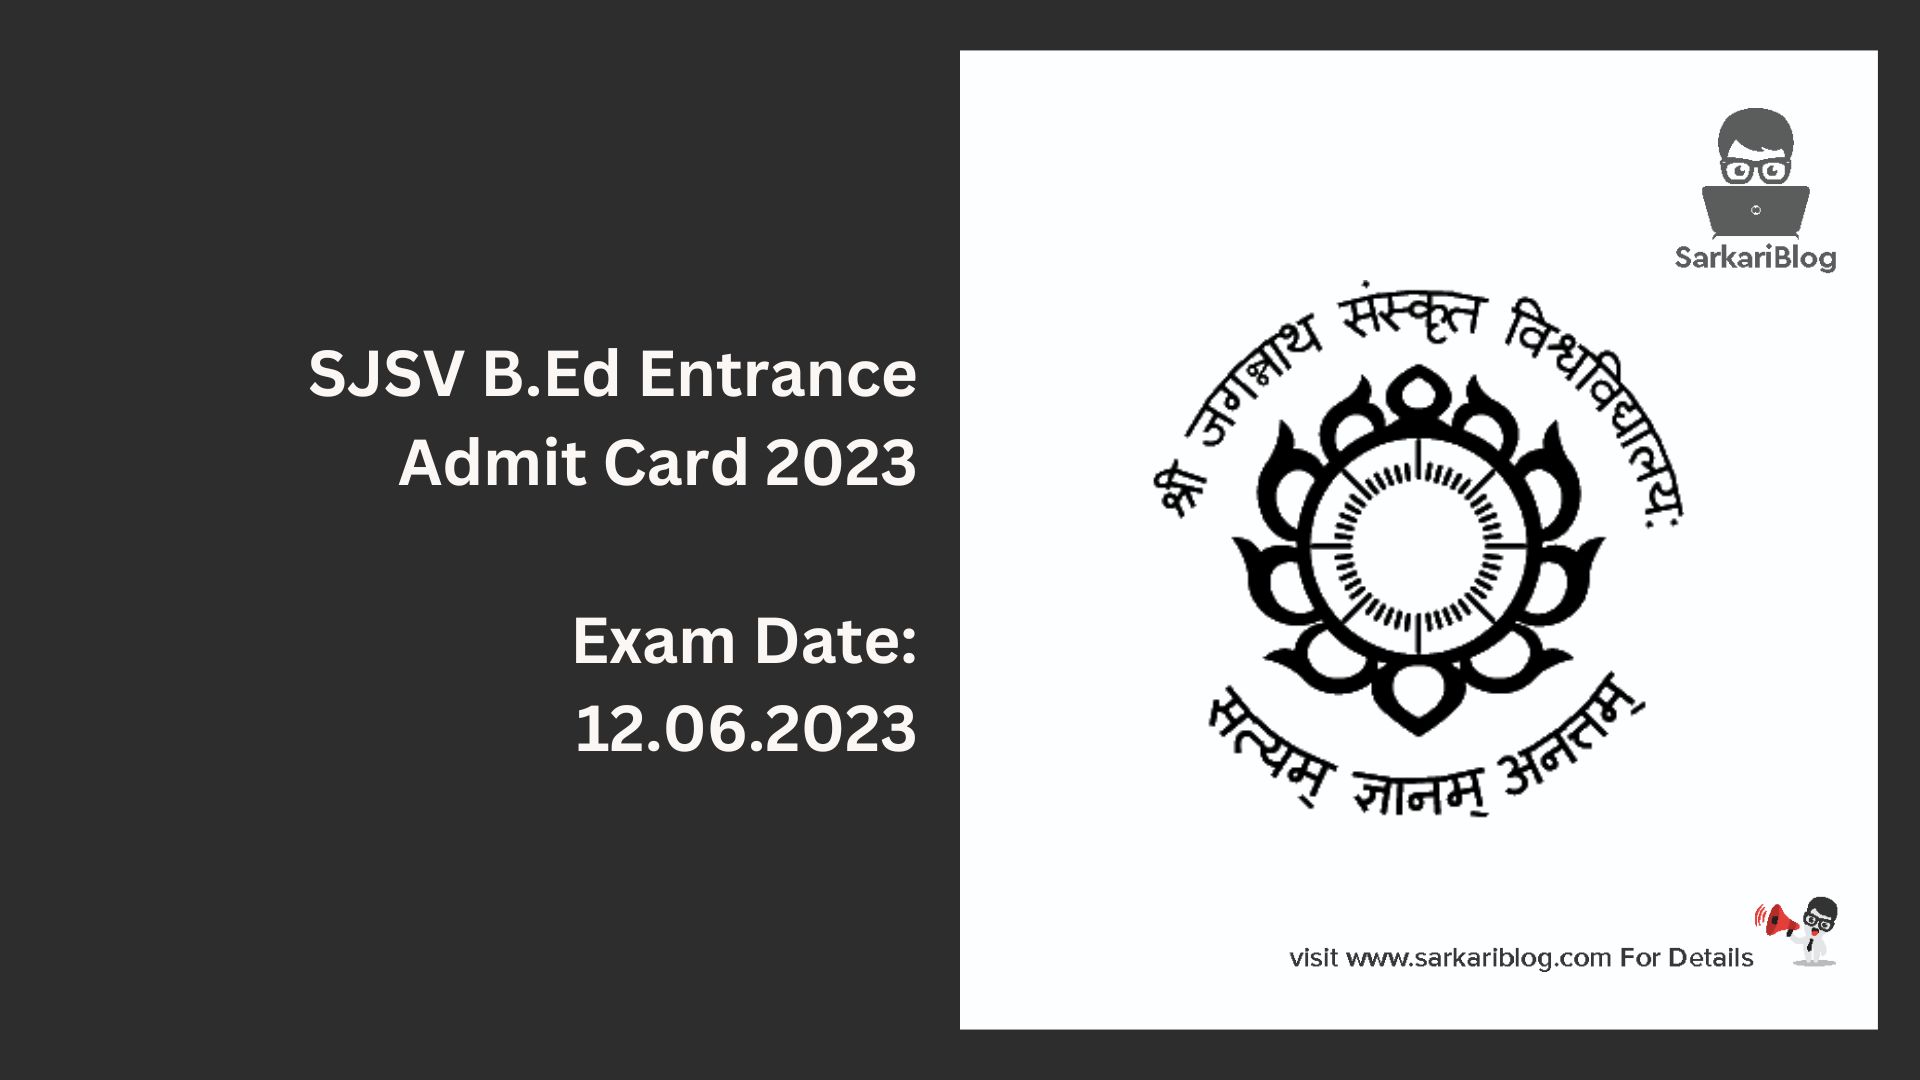 SJSV B.Ed Entrance Admit Card 2023